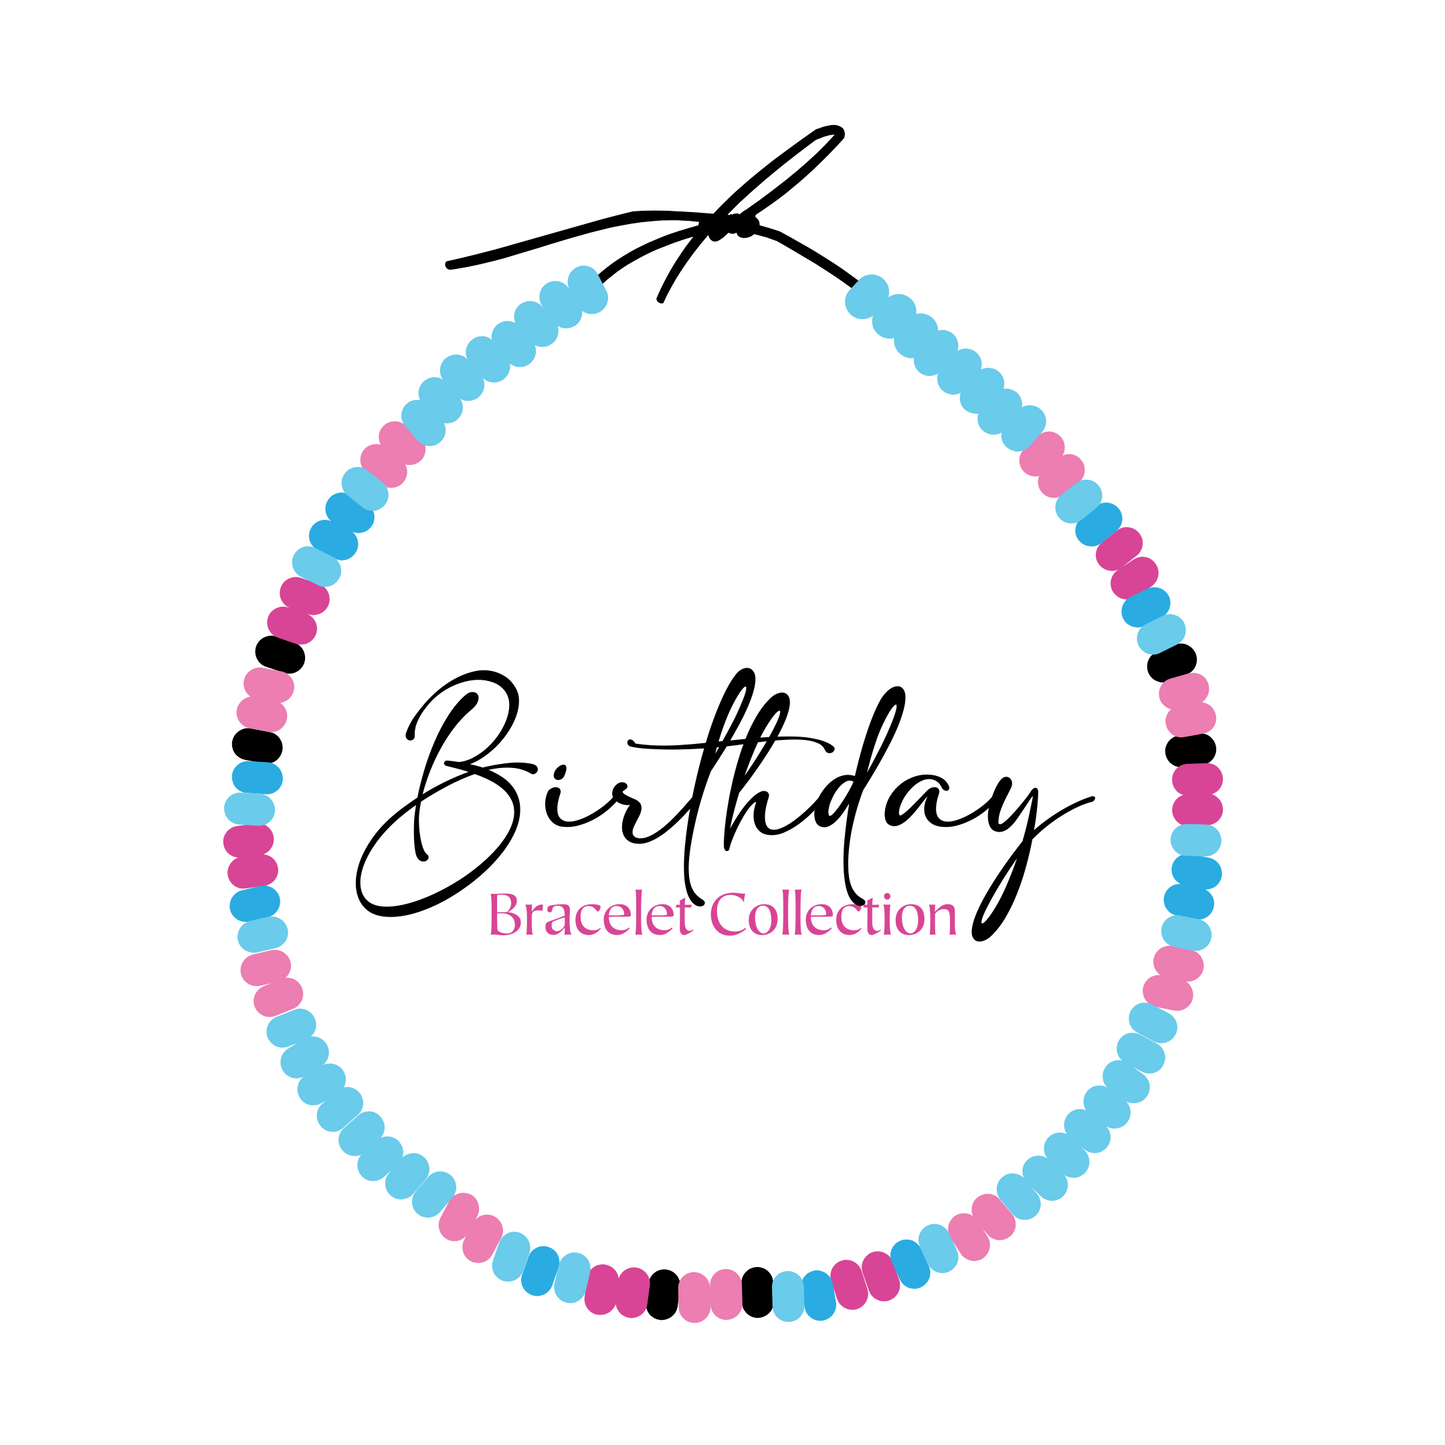 Sarah Birthday Bracelet